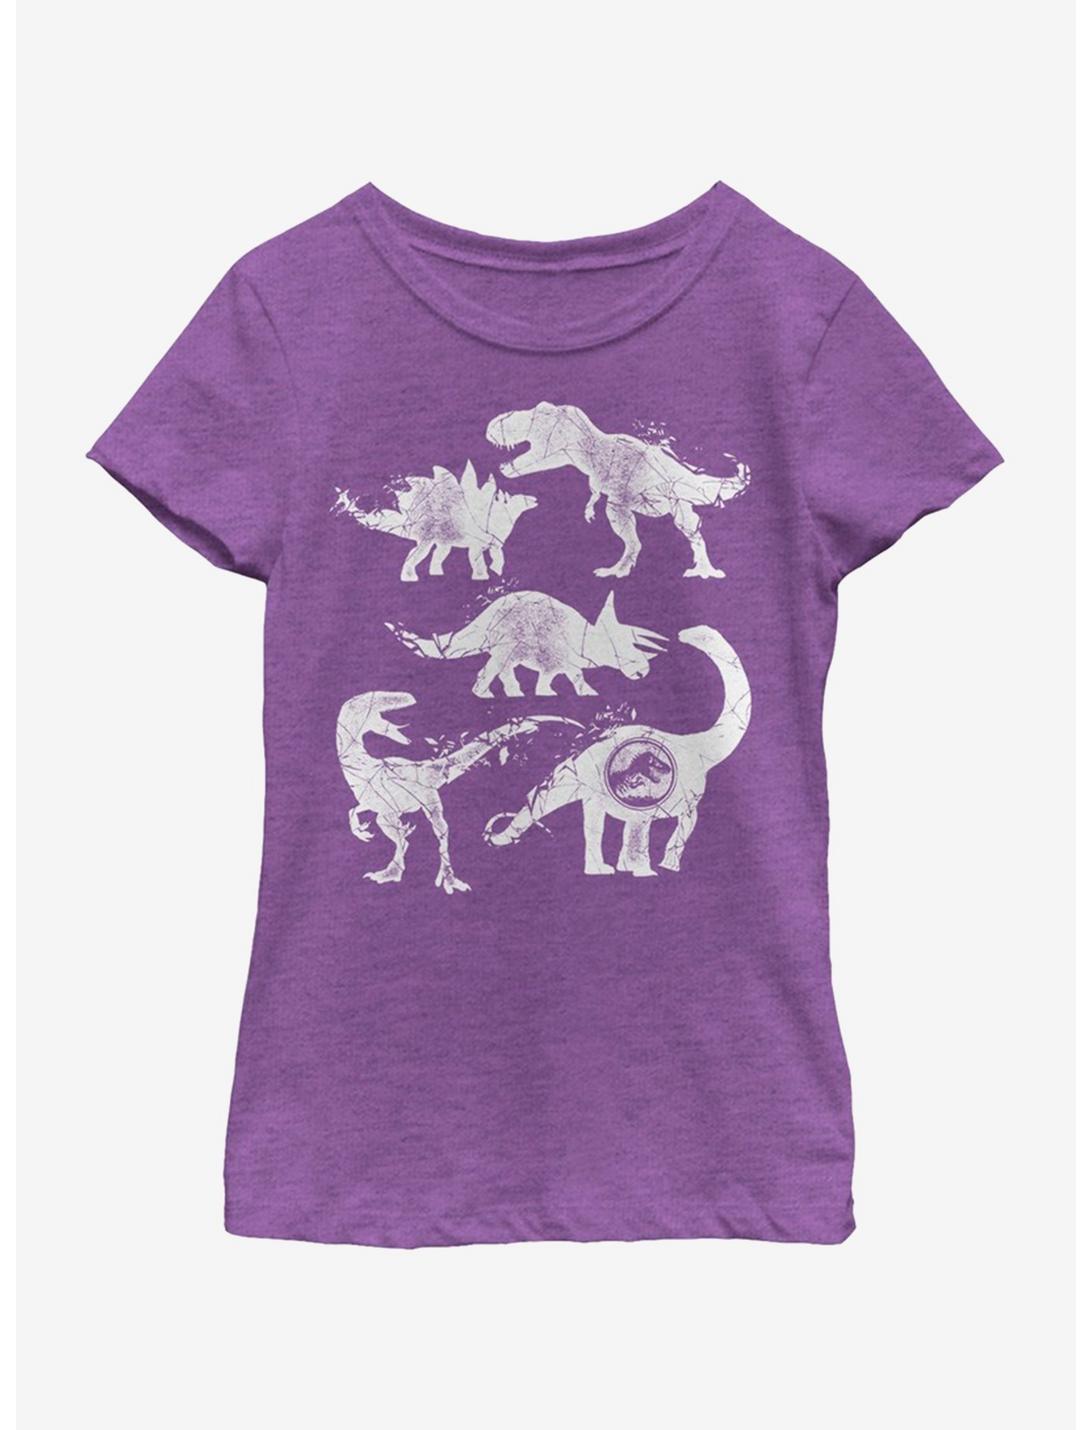 Jurassic Park Crackin Up Youth Girls T-Shirt, PURPLE BERRY, hi-res